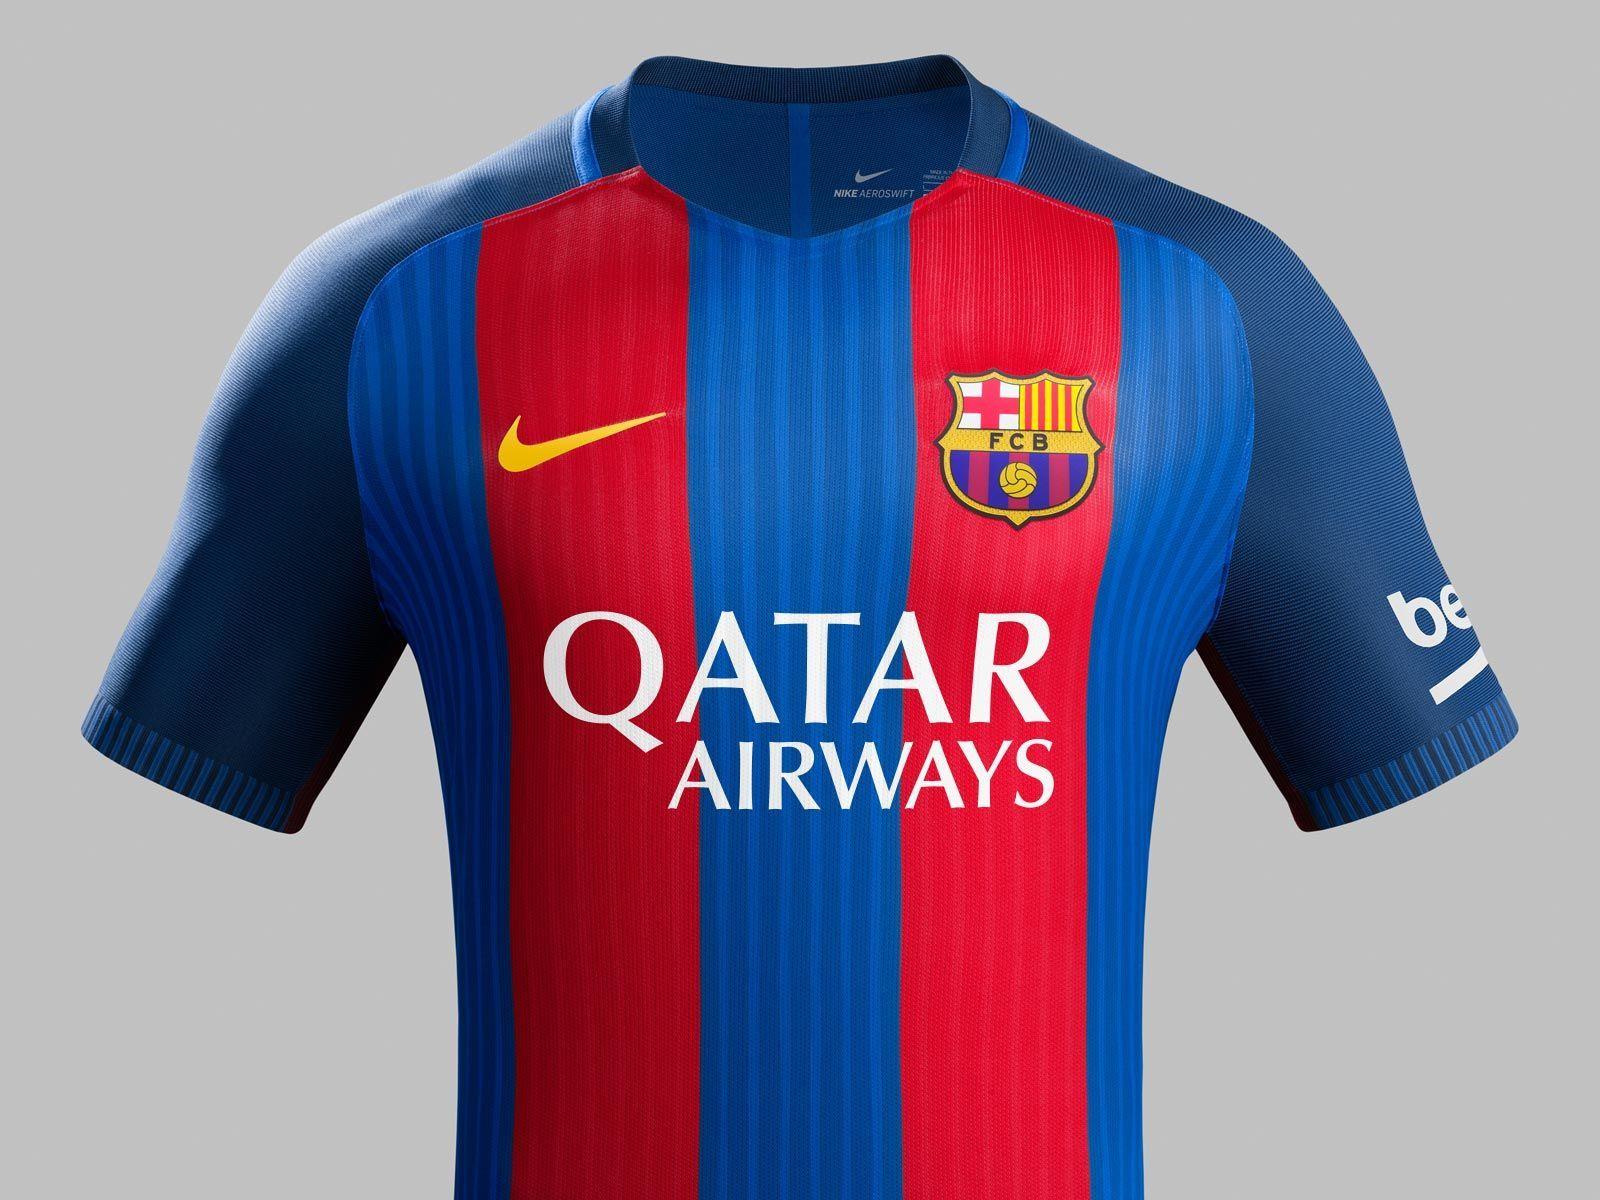 Barcelona to Announce New Qatar Airways Sponsorship Deal. Amazon